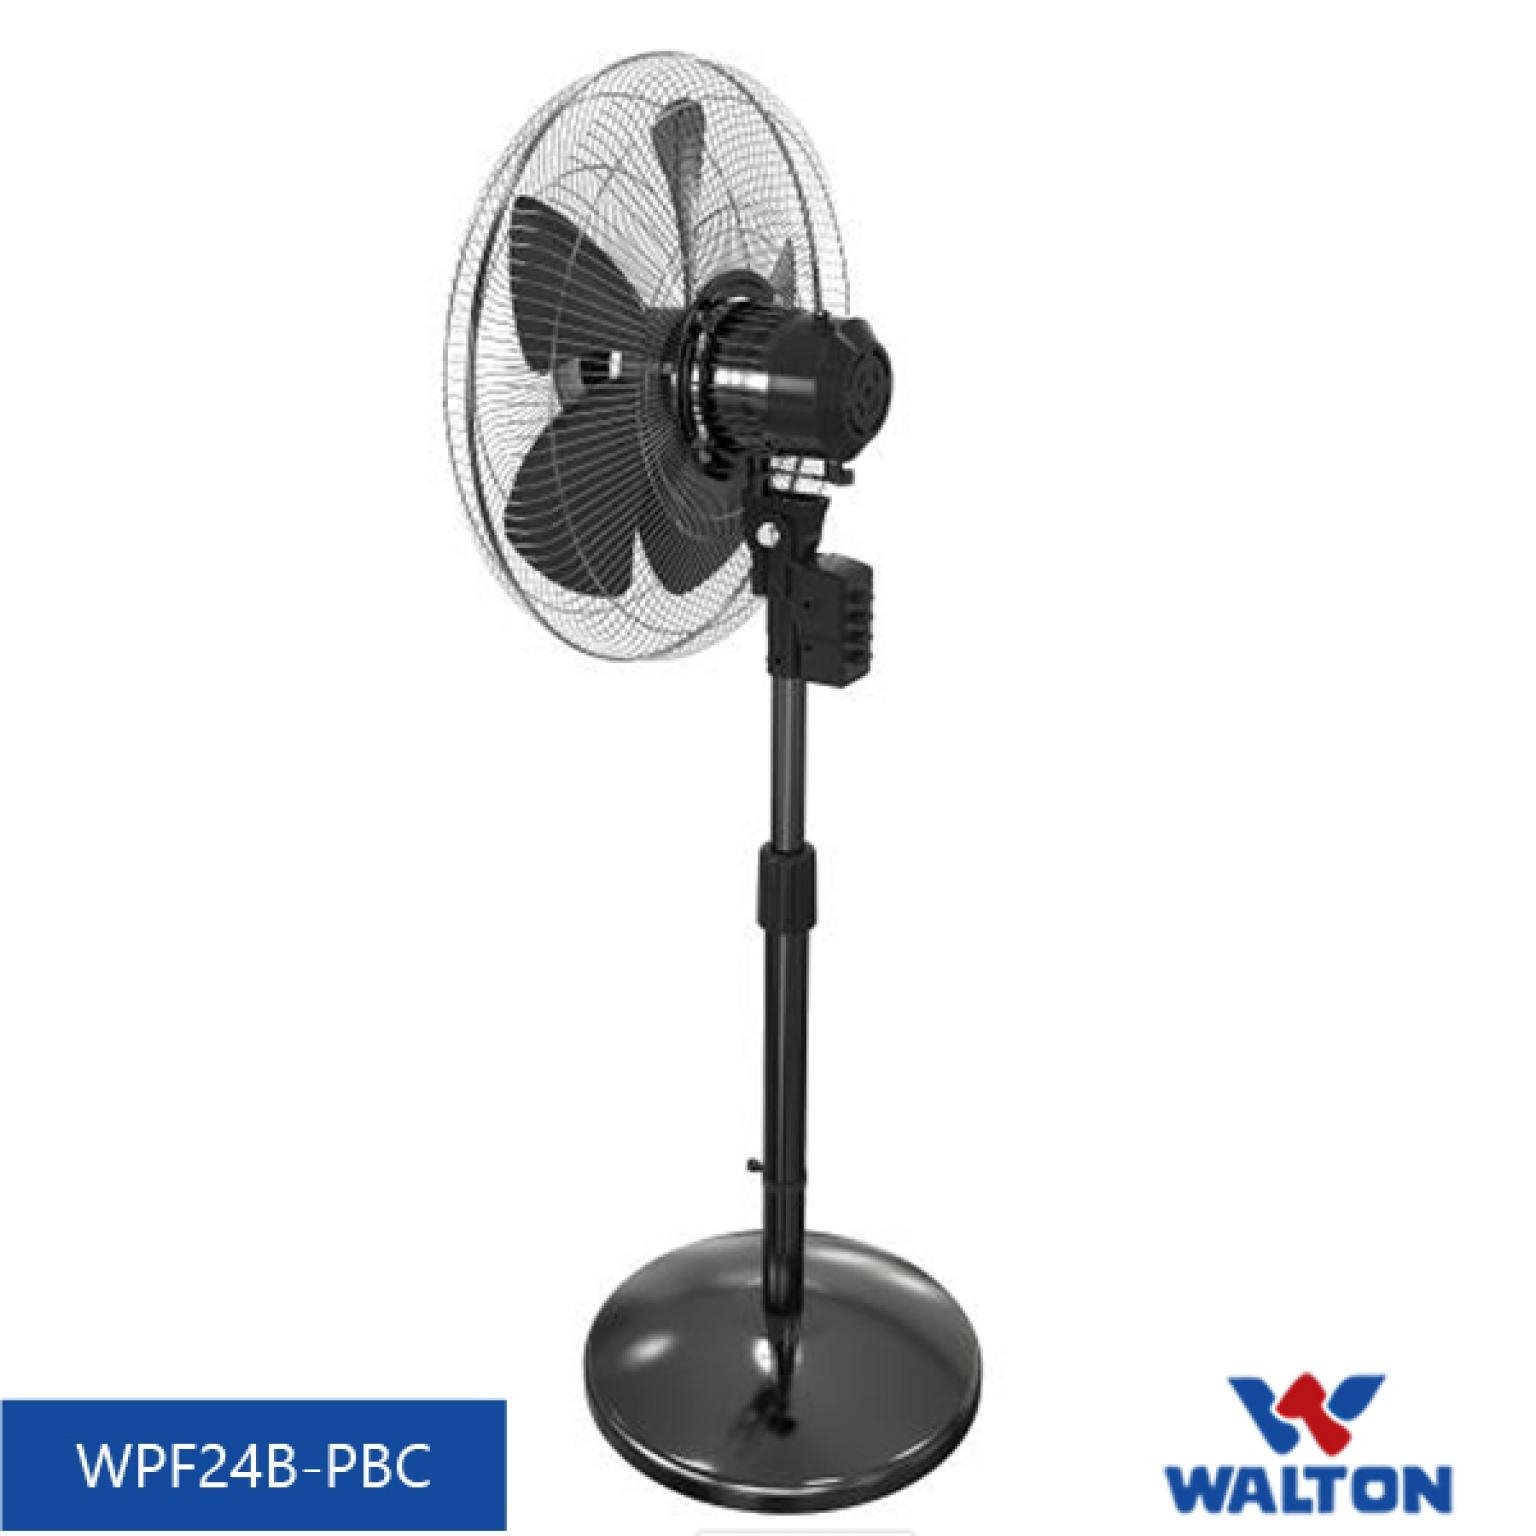 Pedestal Fan WPF24B-PBC